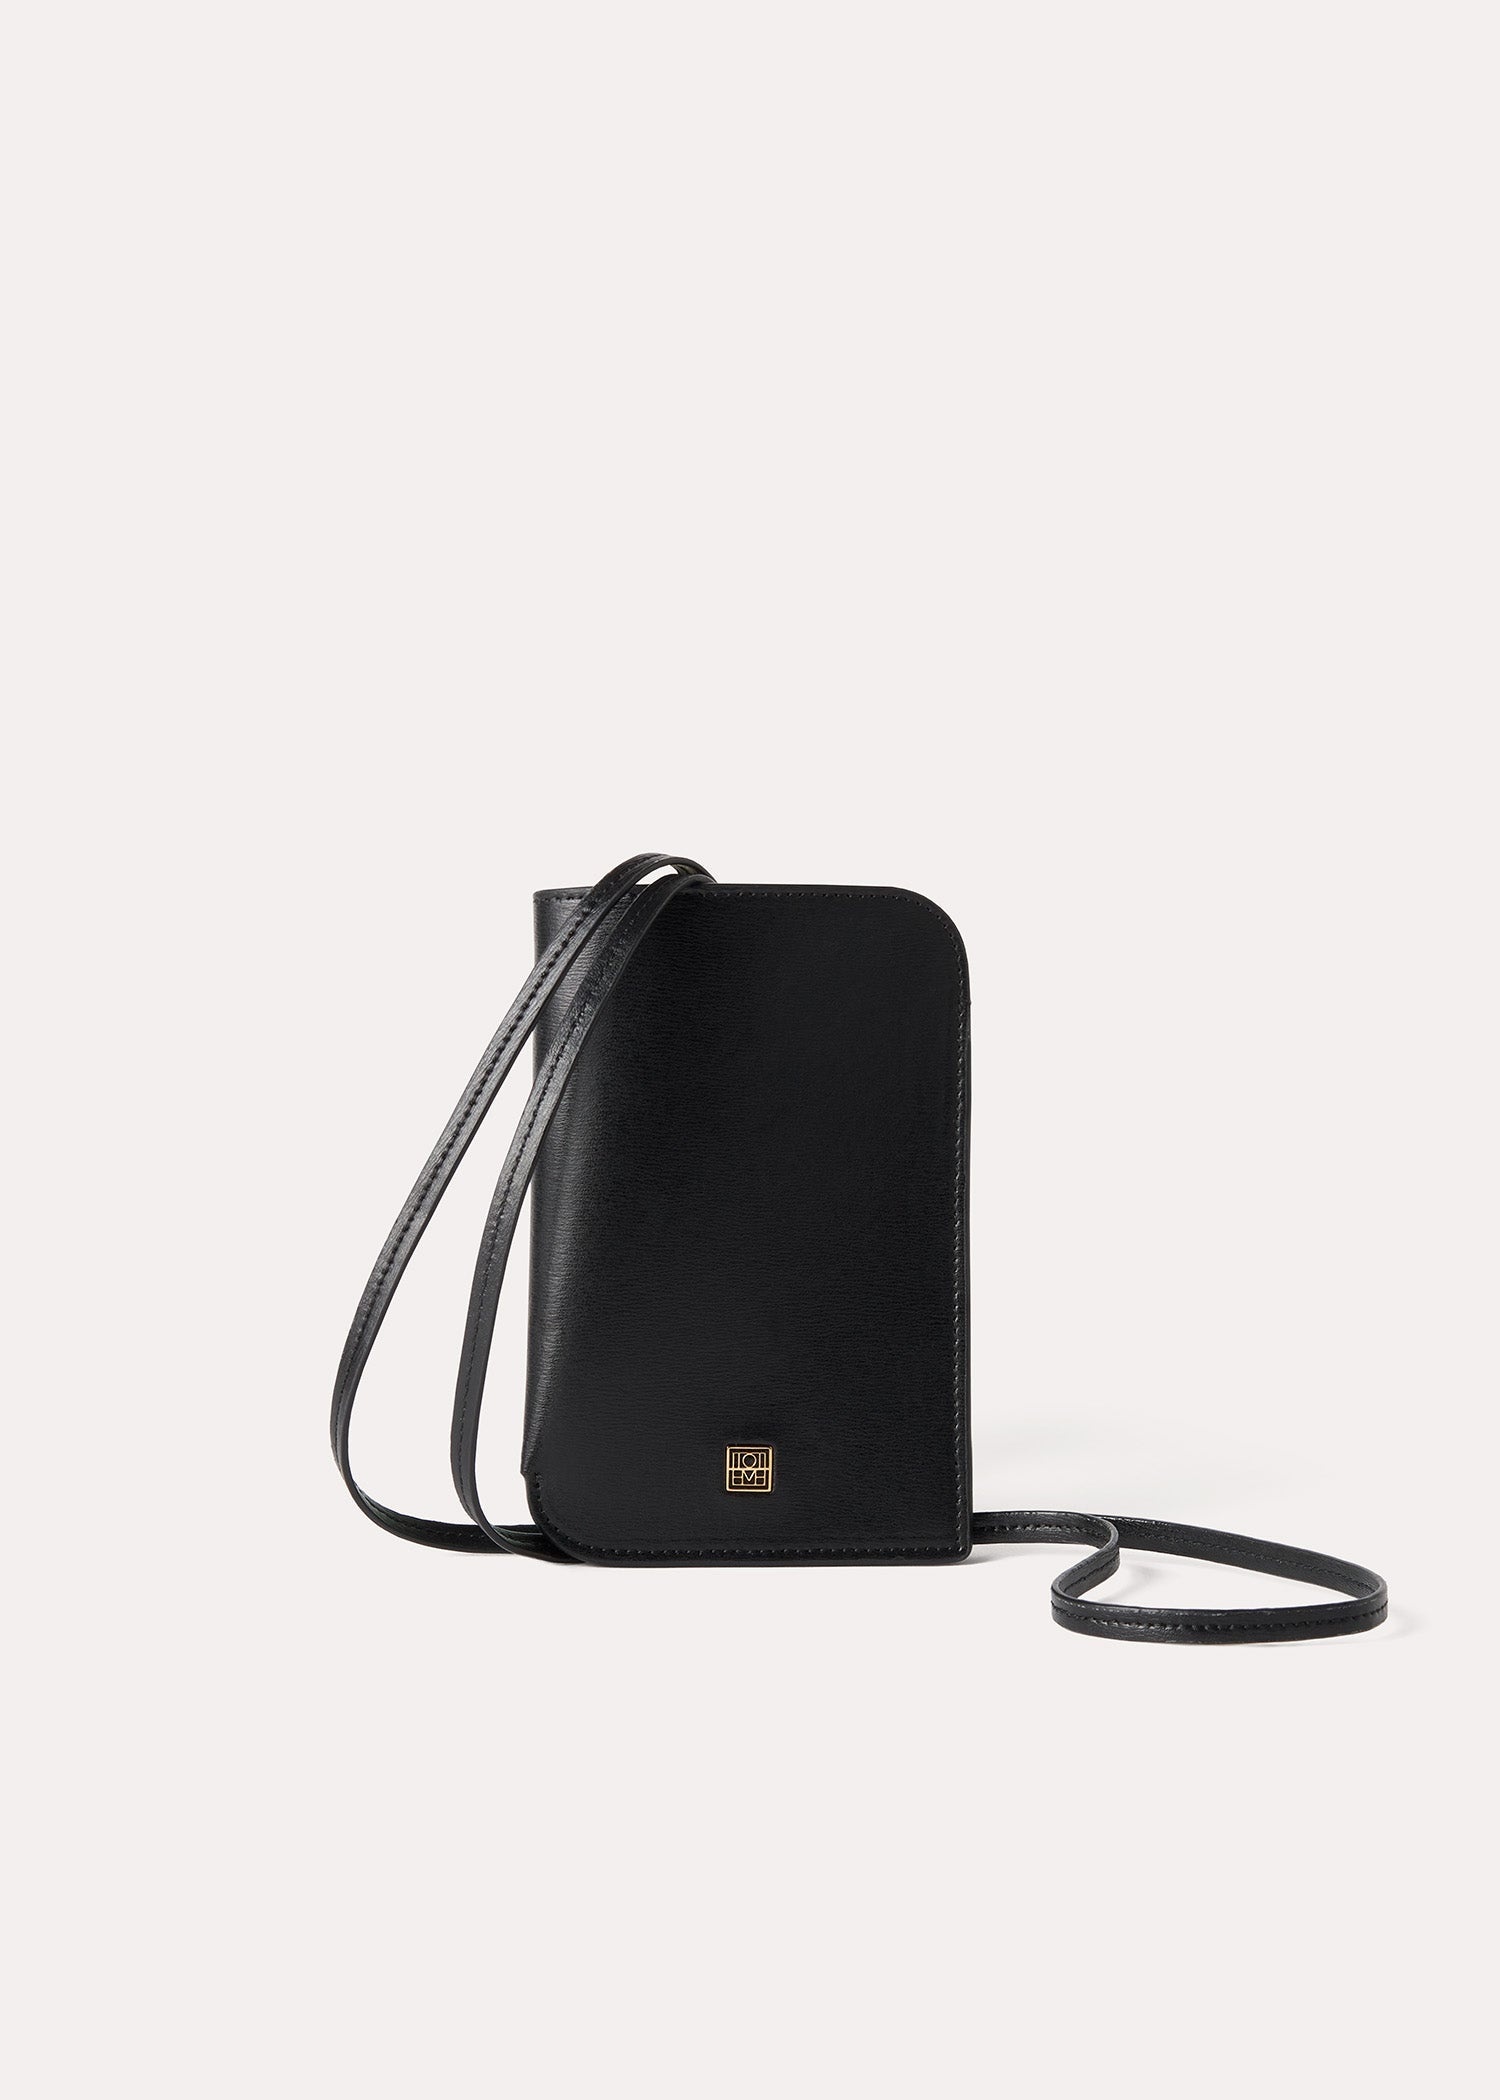 Pocket leather pouch black - 1